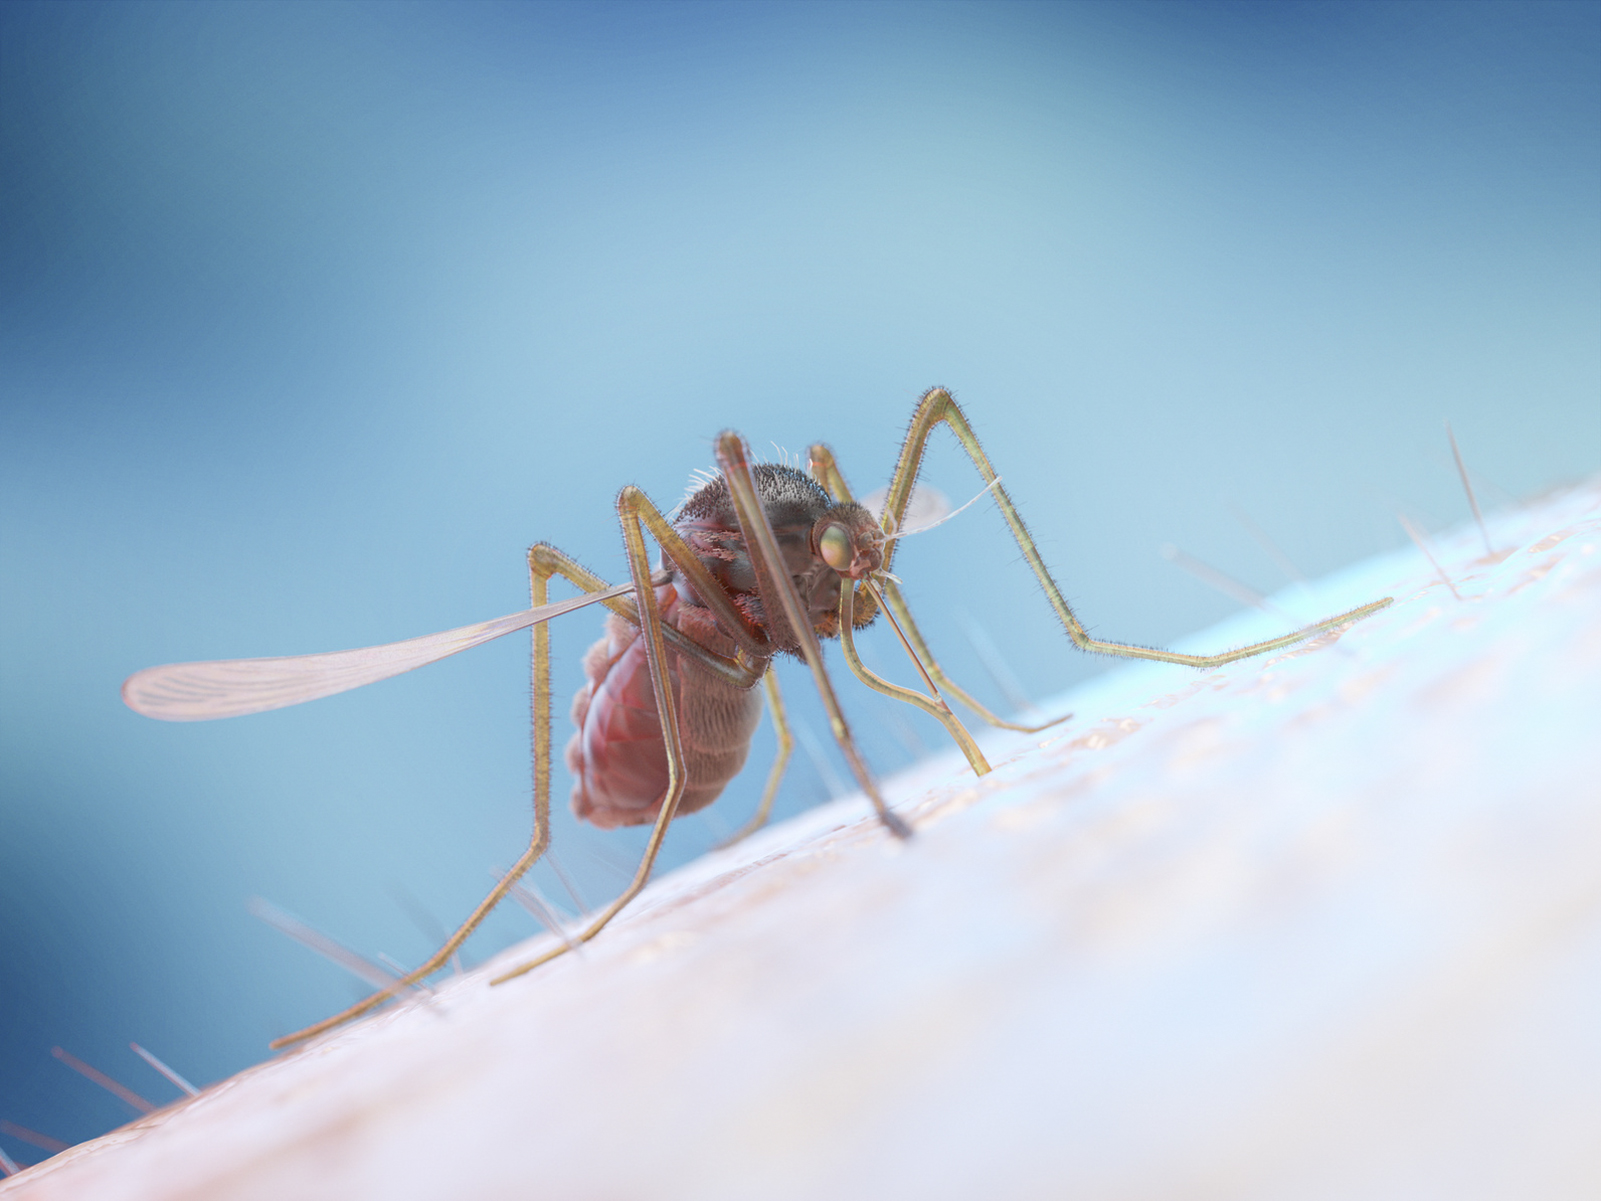 Le moustique peut transmettre le paludisme. © Sebastian Kaulitzki, Fotolia